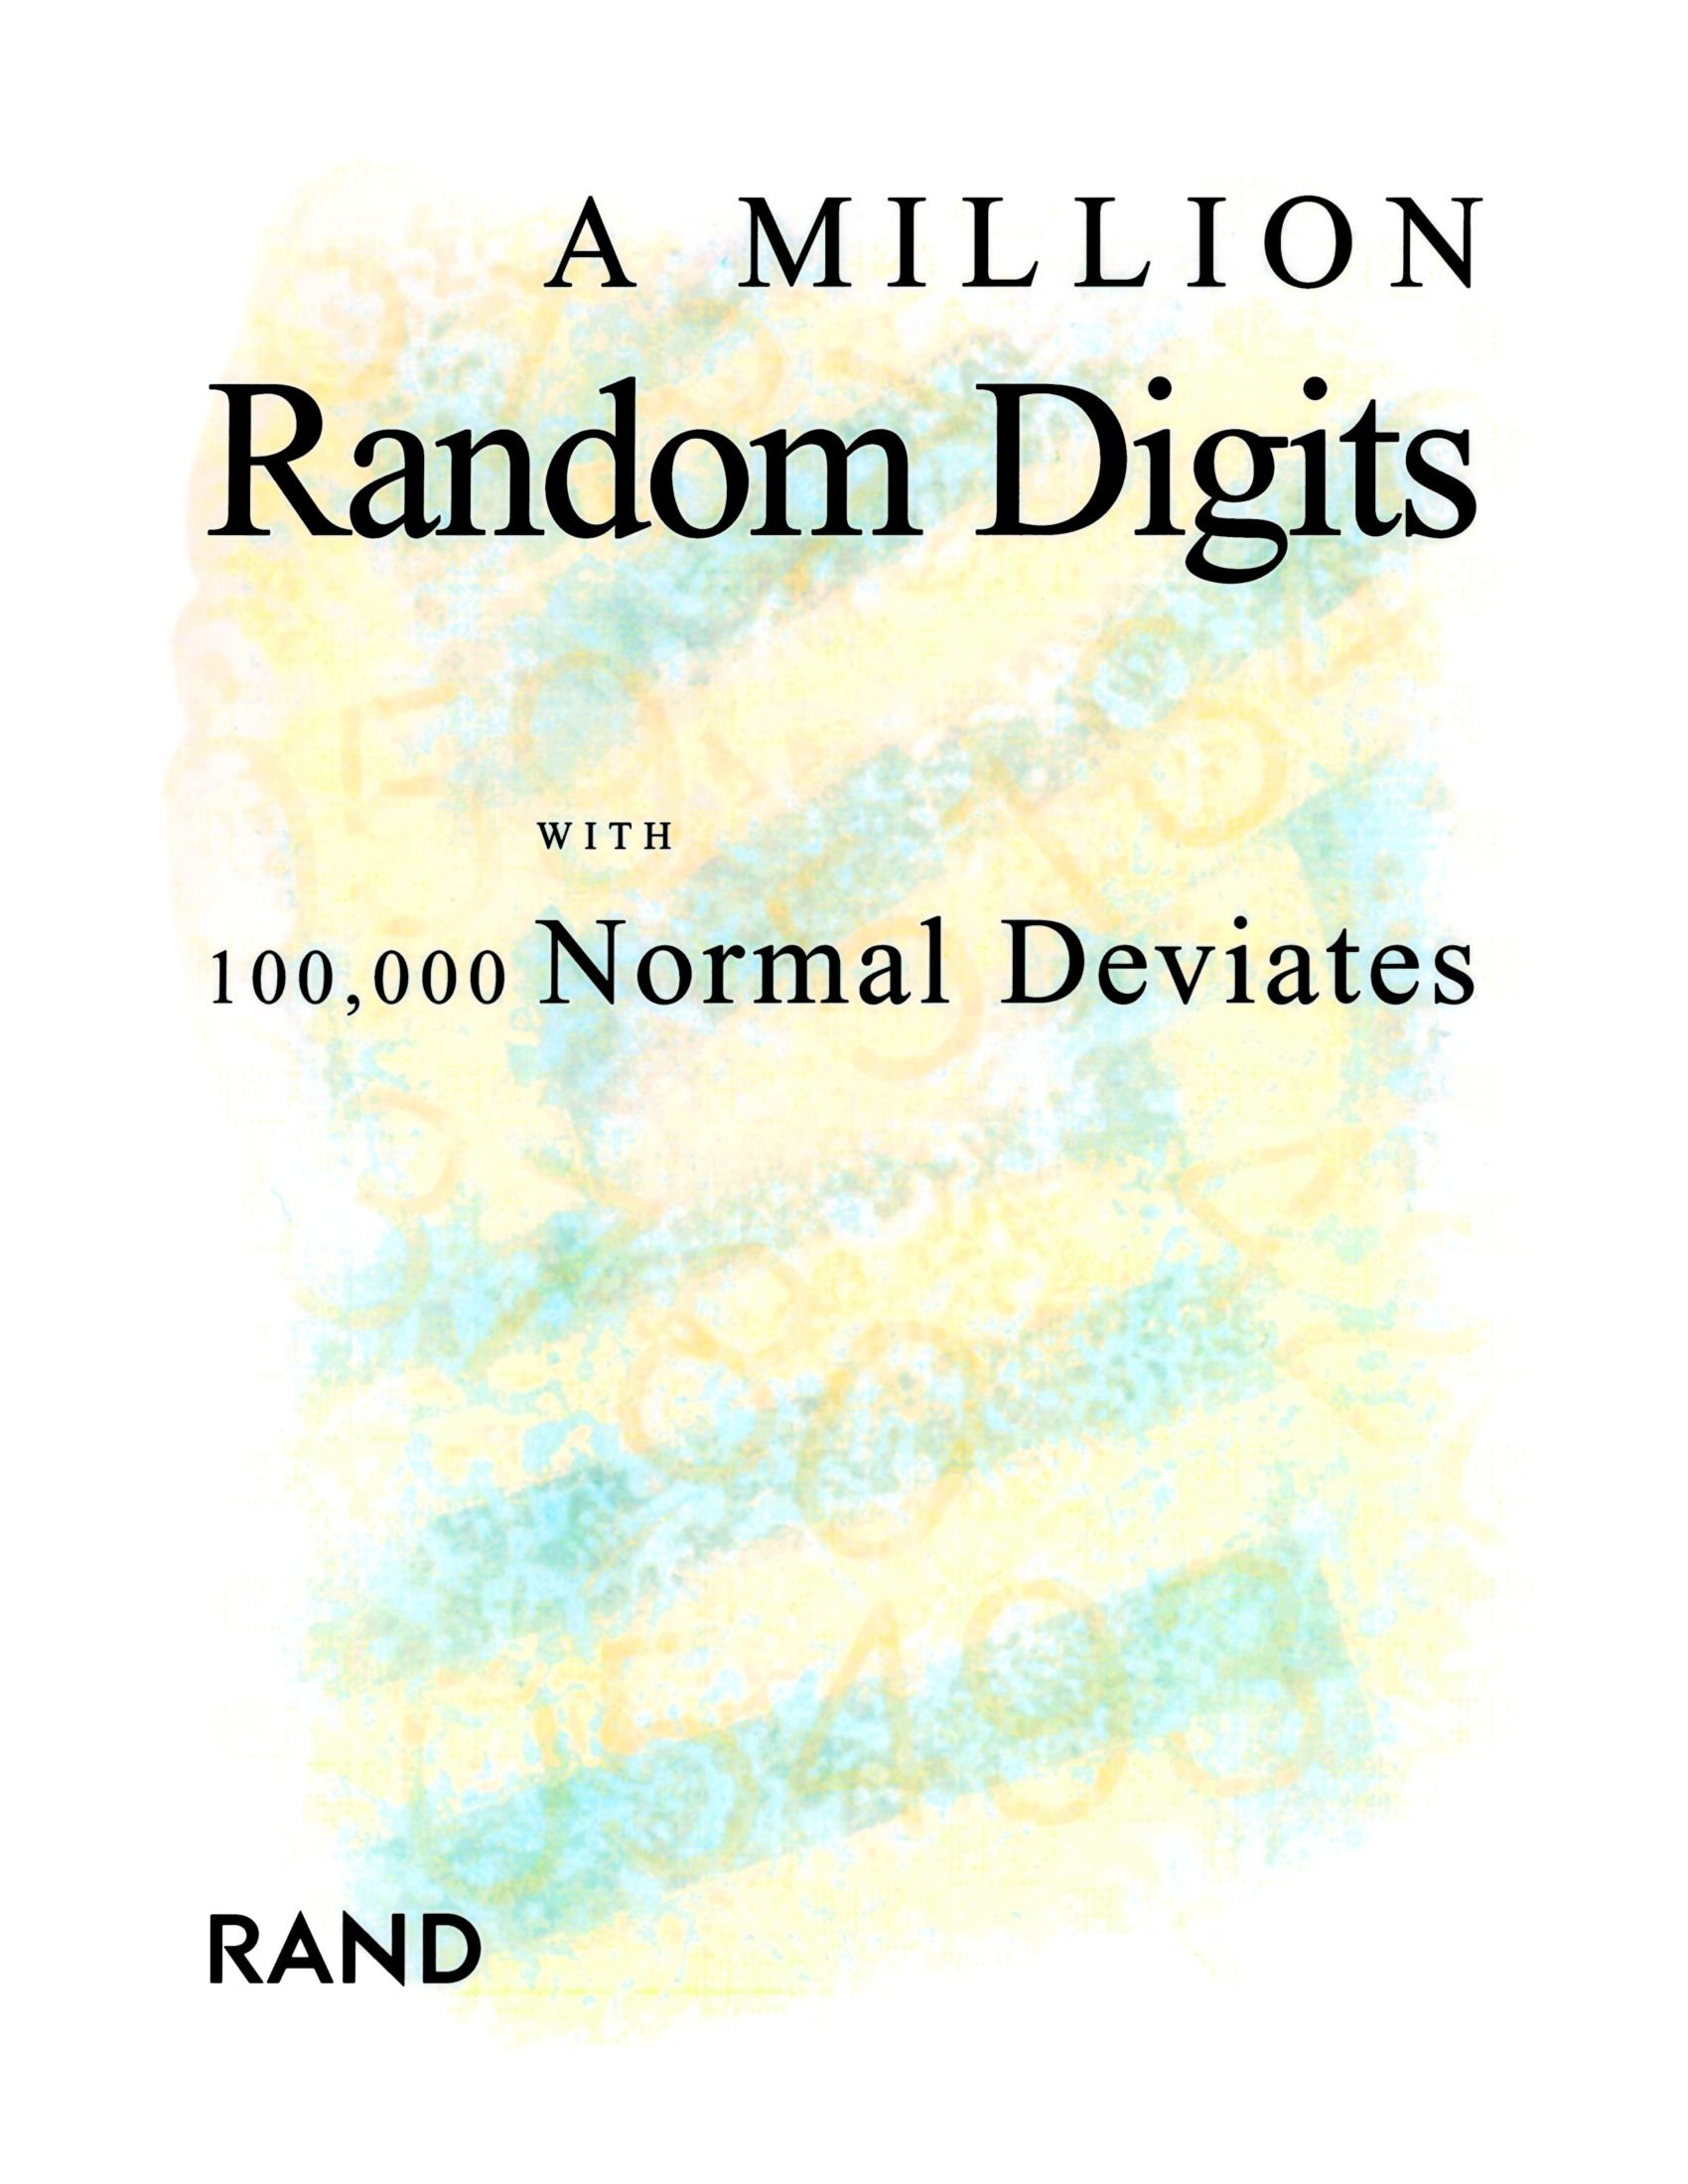 A Million Random Digits with 100, 000 Normal Deviates: Amazon.co.uk ...